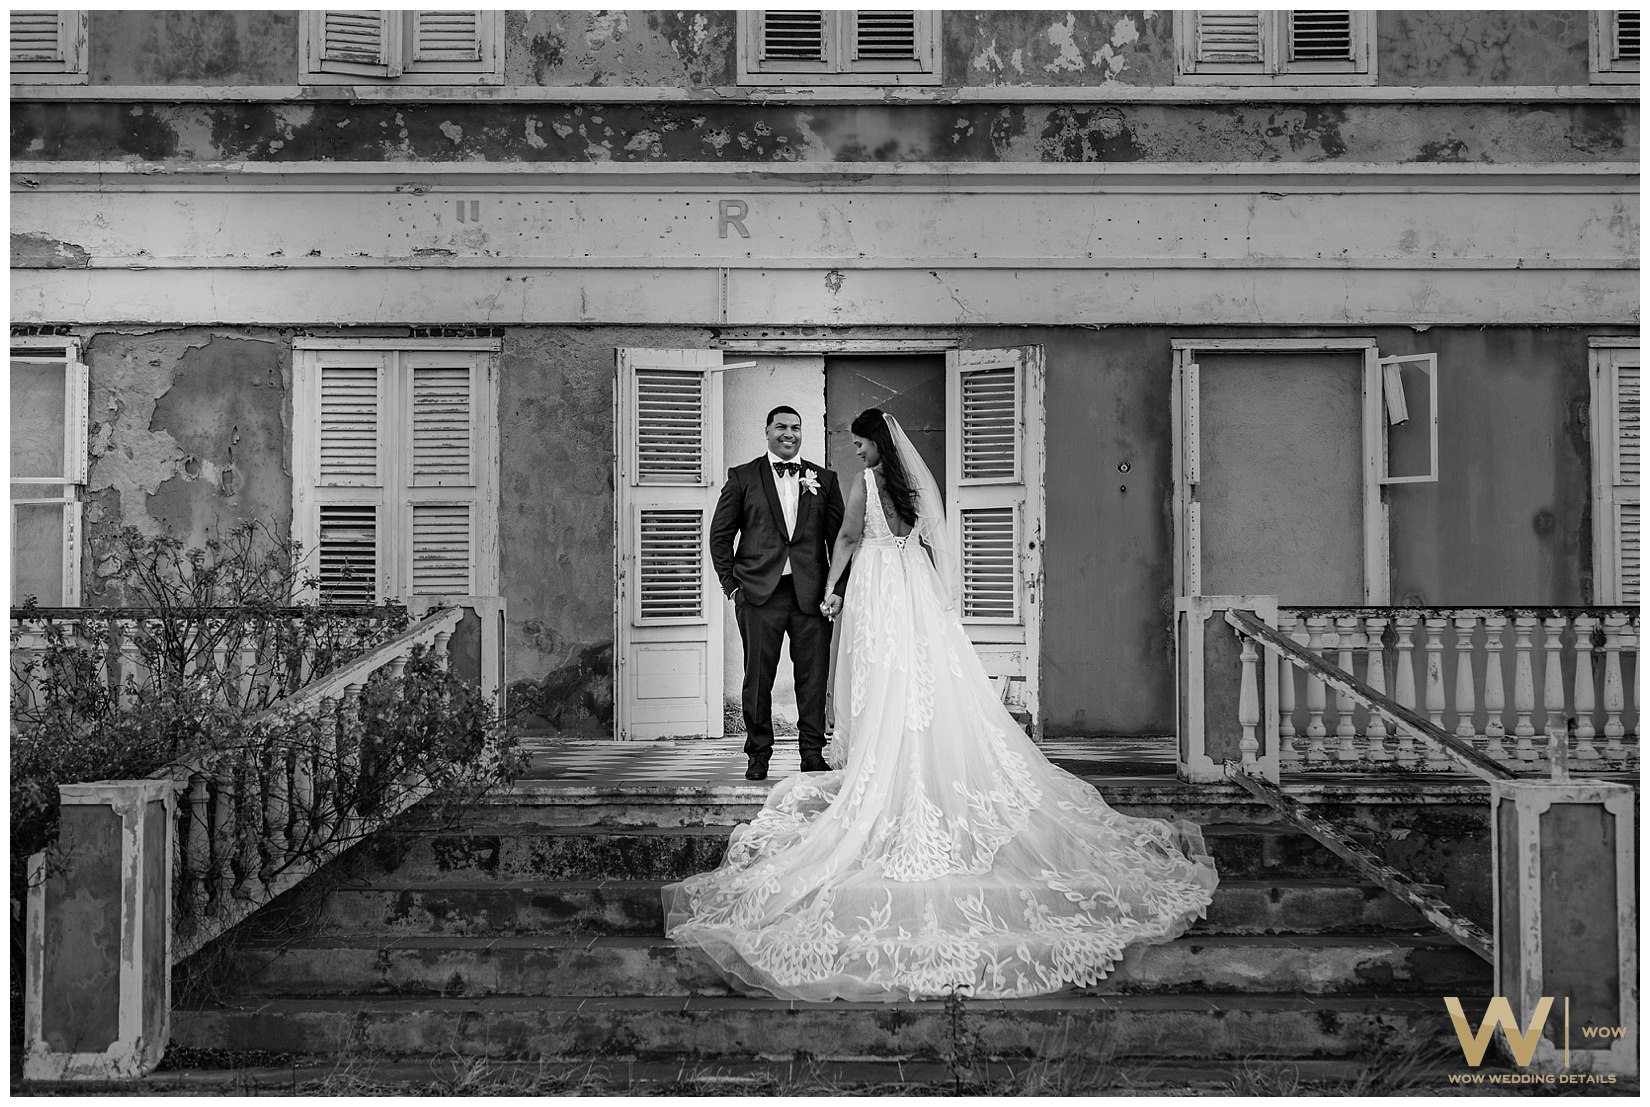 Moira & Robby - Wow Wedding Details Photography @ Sirena Bay Curacao_0009.jpg